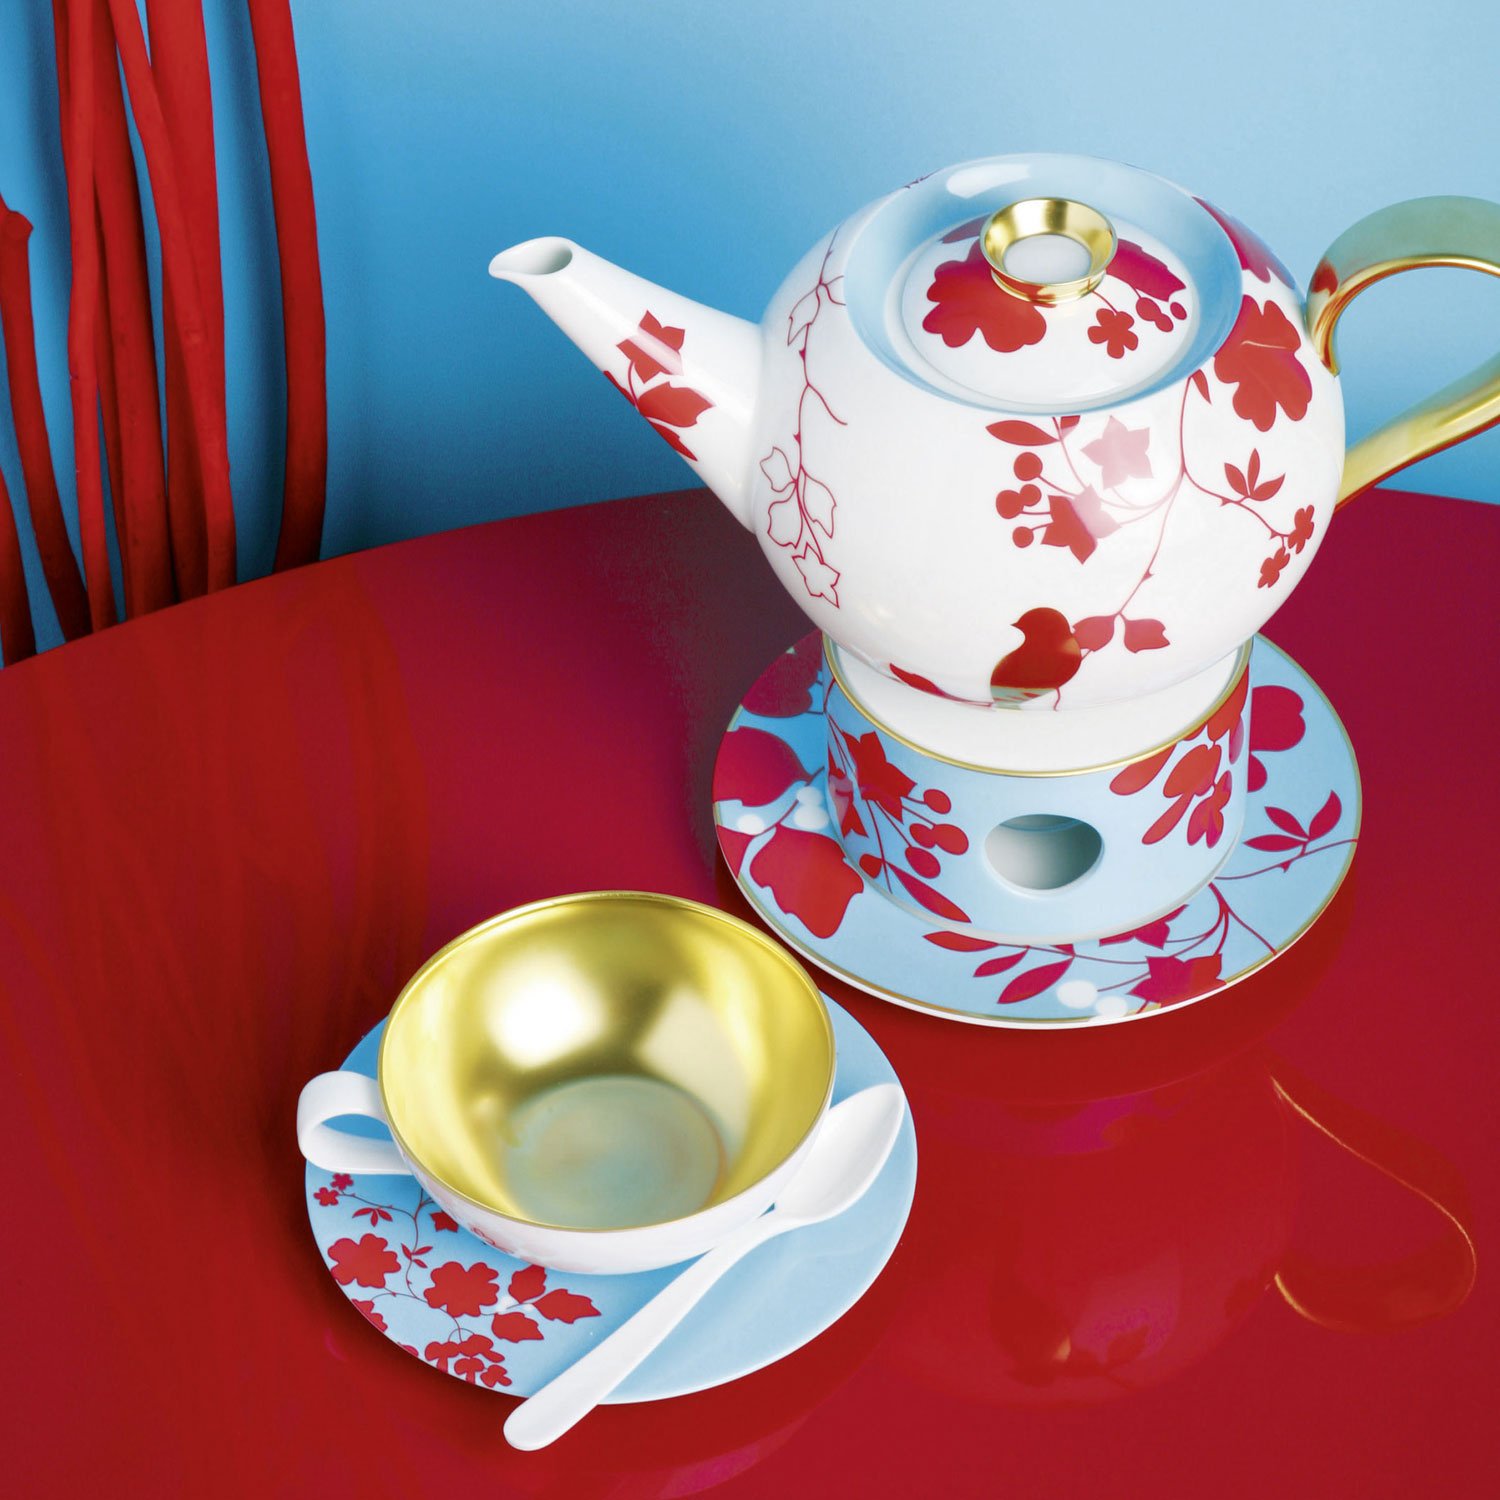 Teapot with Tea Strainer Sieger by Furstenberg Collezione My China! Emperor s Garden 1.45 L